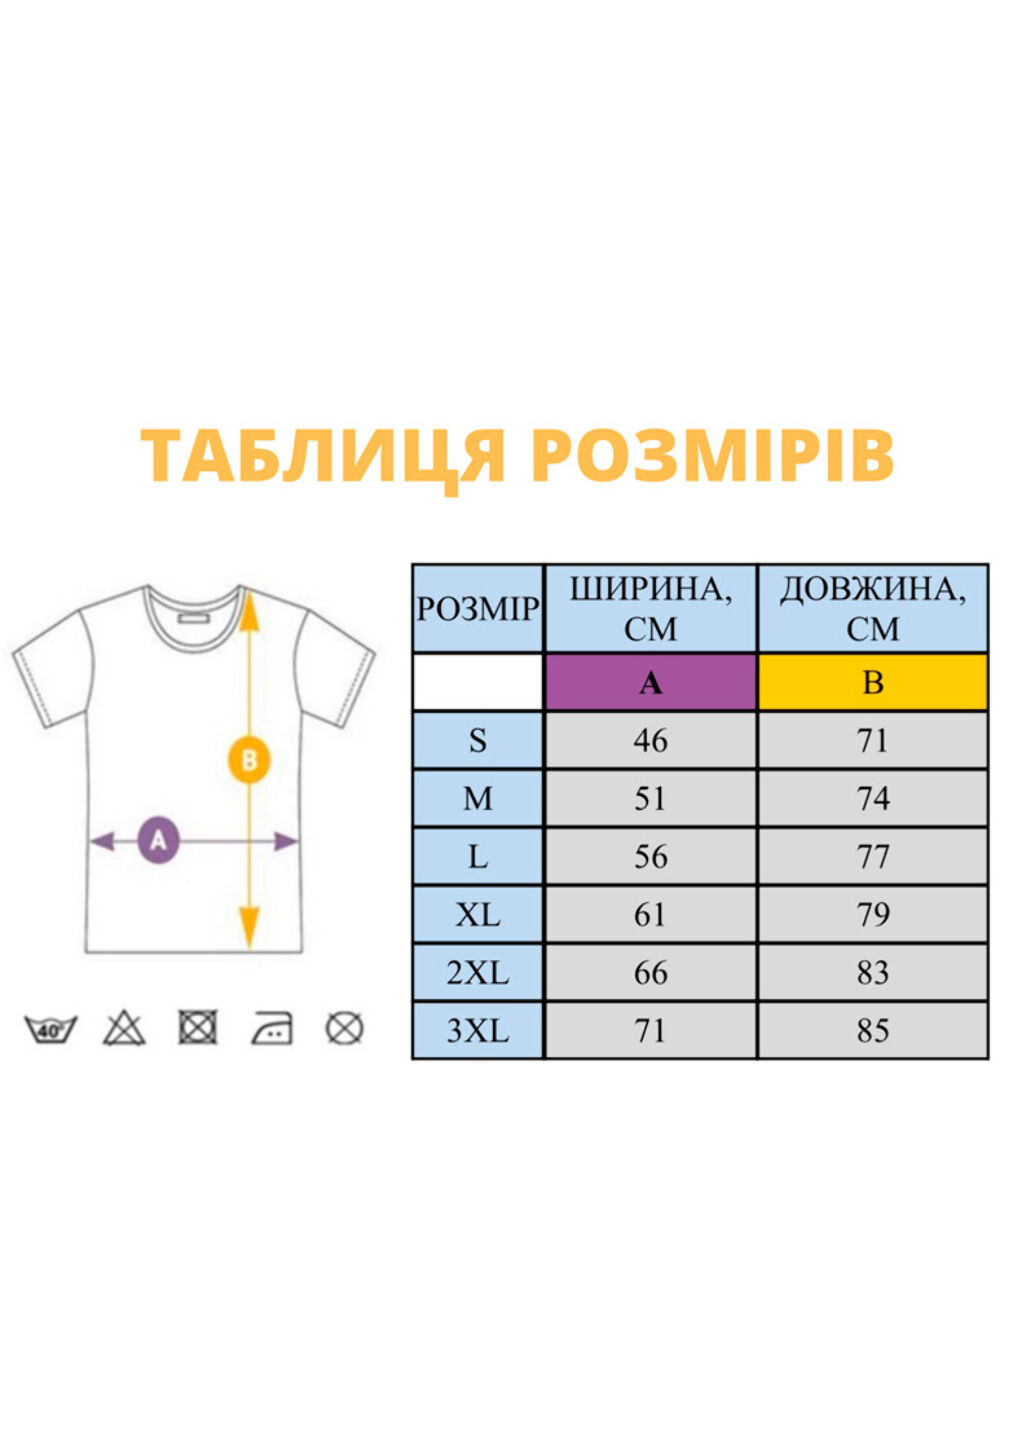 Хаки (оливковая) футболка з вишивкою fight like ukranians 01-1 мужская хаки l No Brand